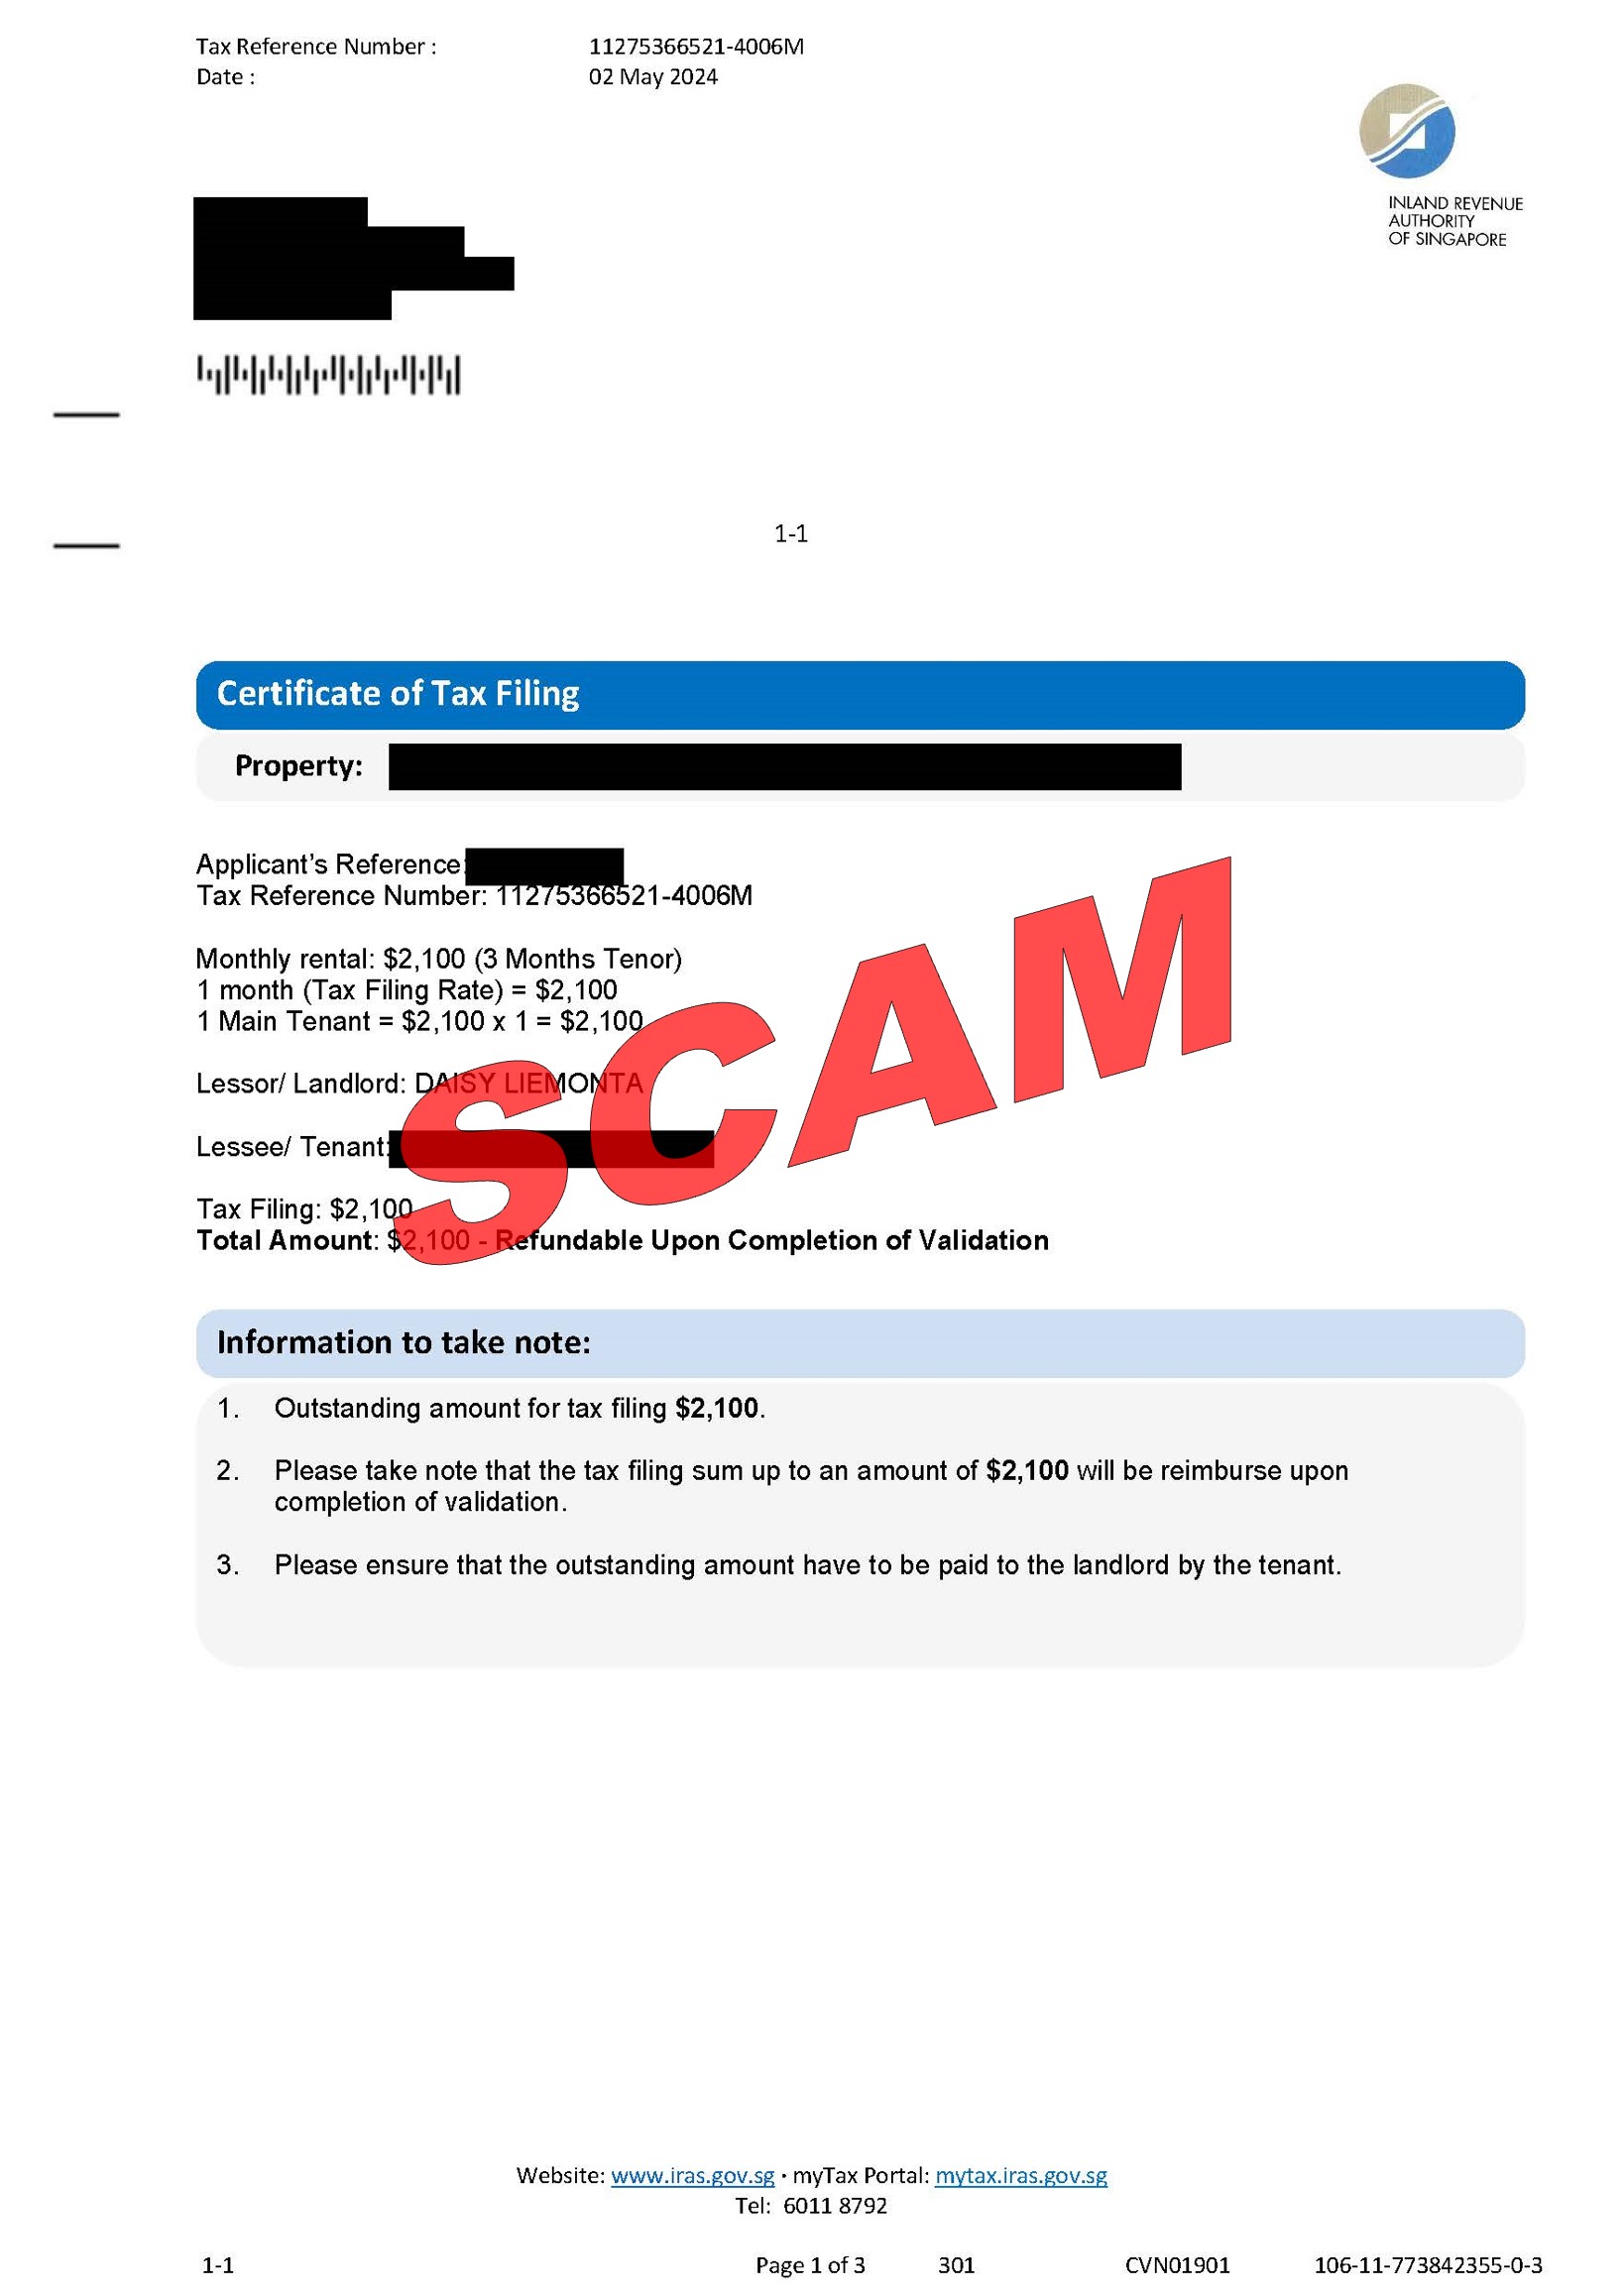 Fake stamp duty invoice scam screenshot